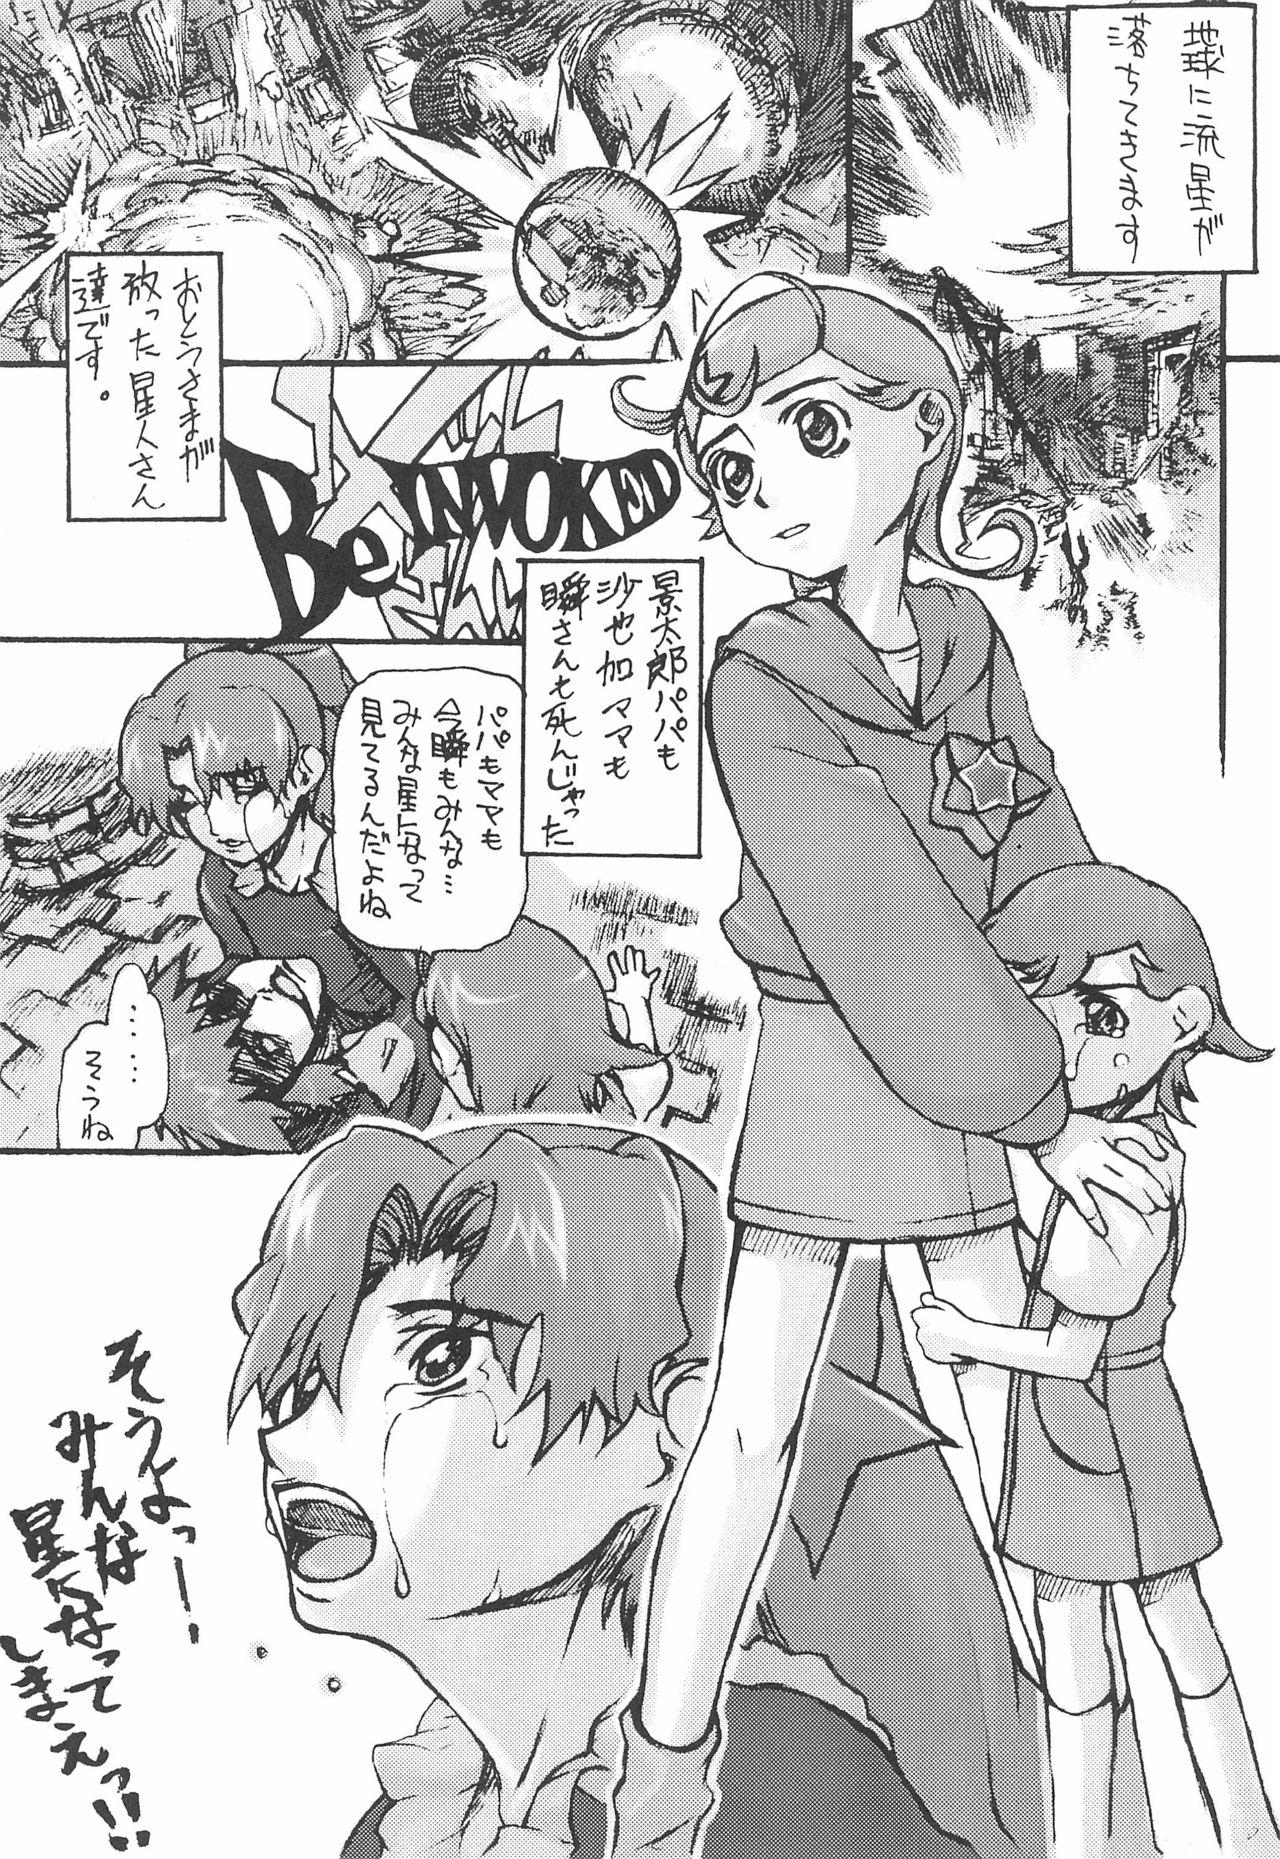 Titties Comet-san Comical Comics - Cosmic baton girl comet-san Blowjob - Page 9